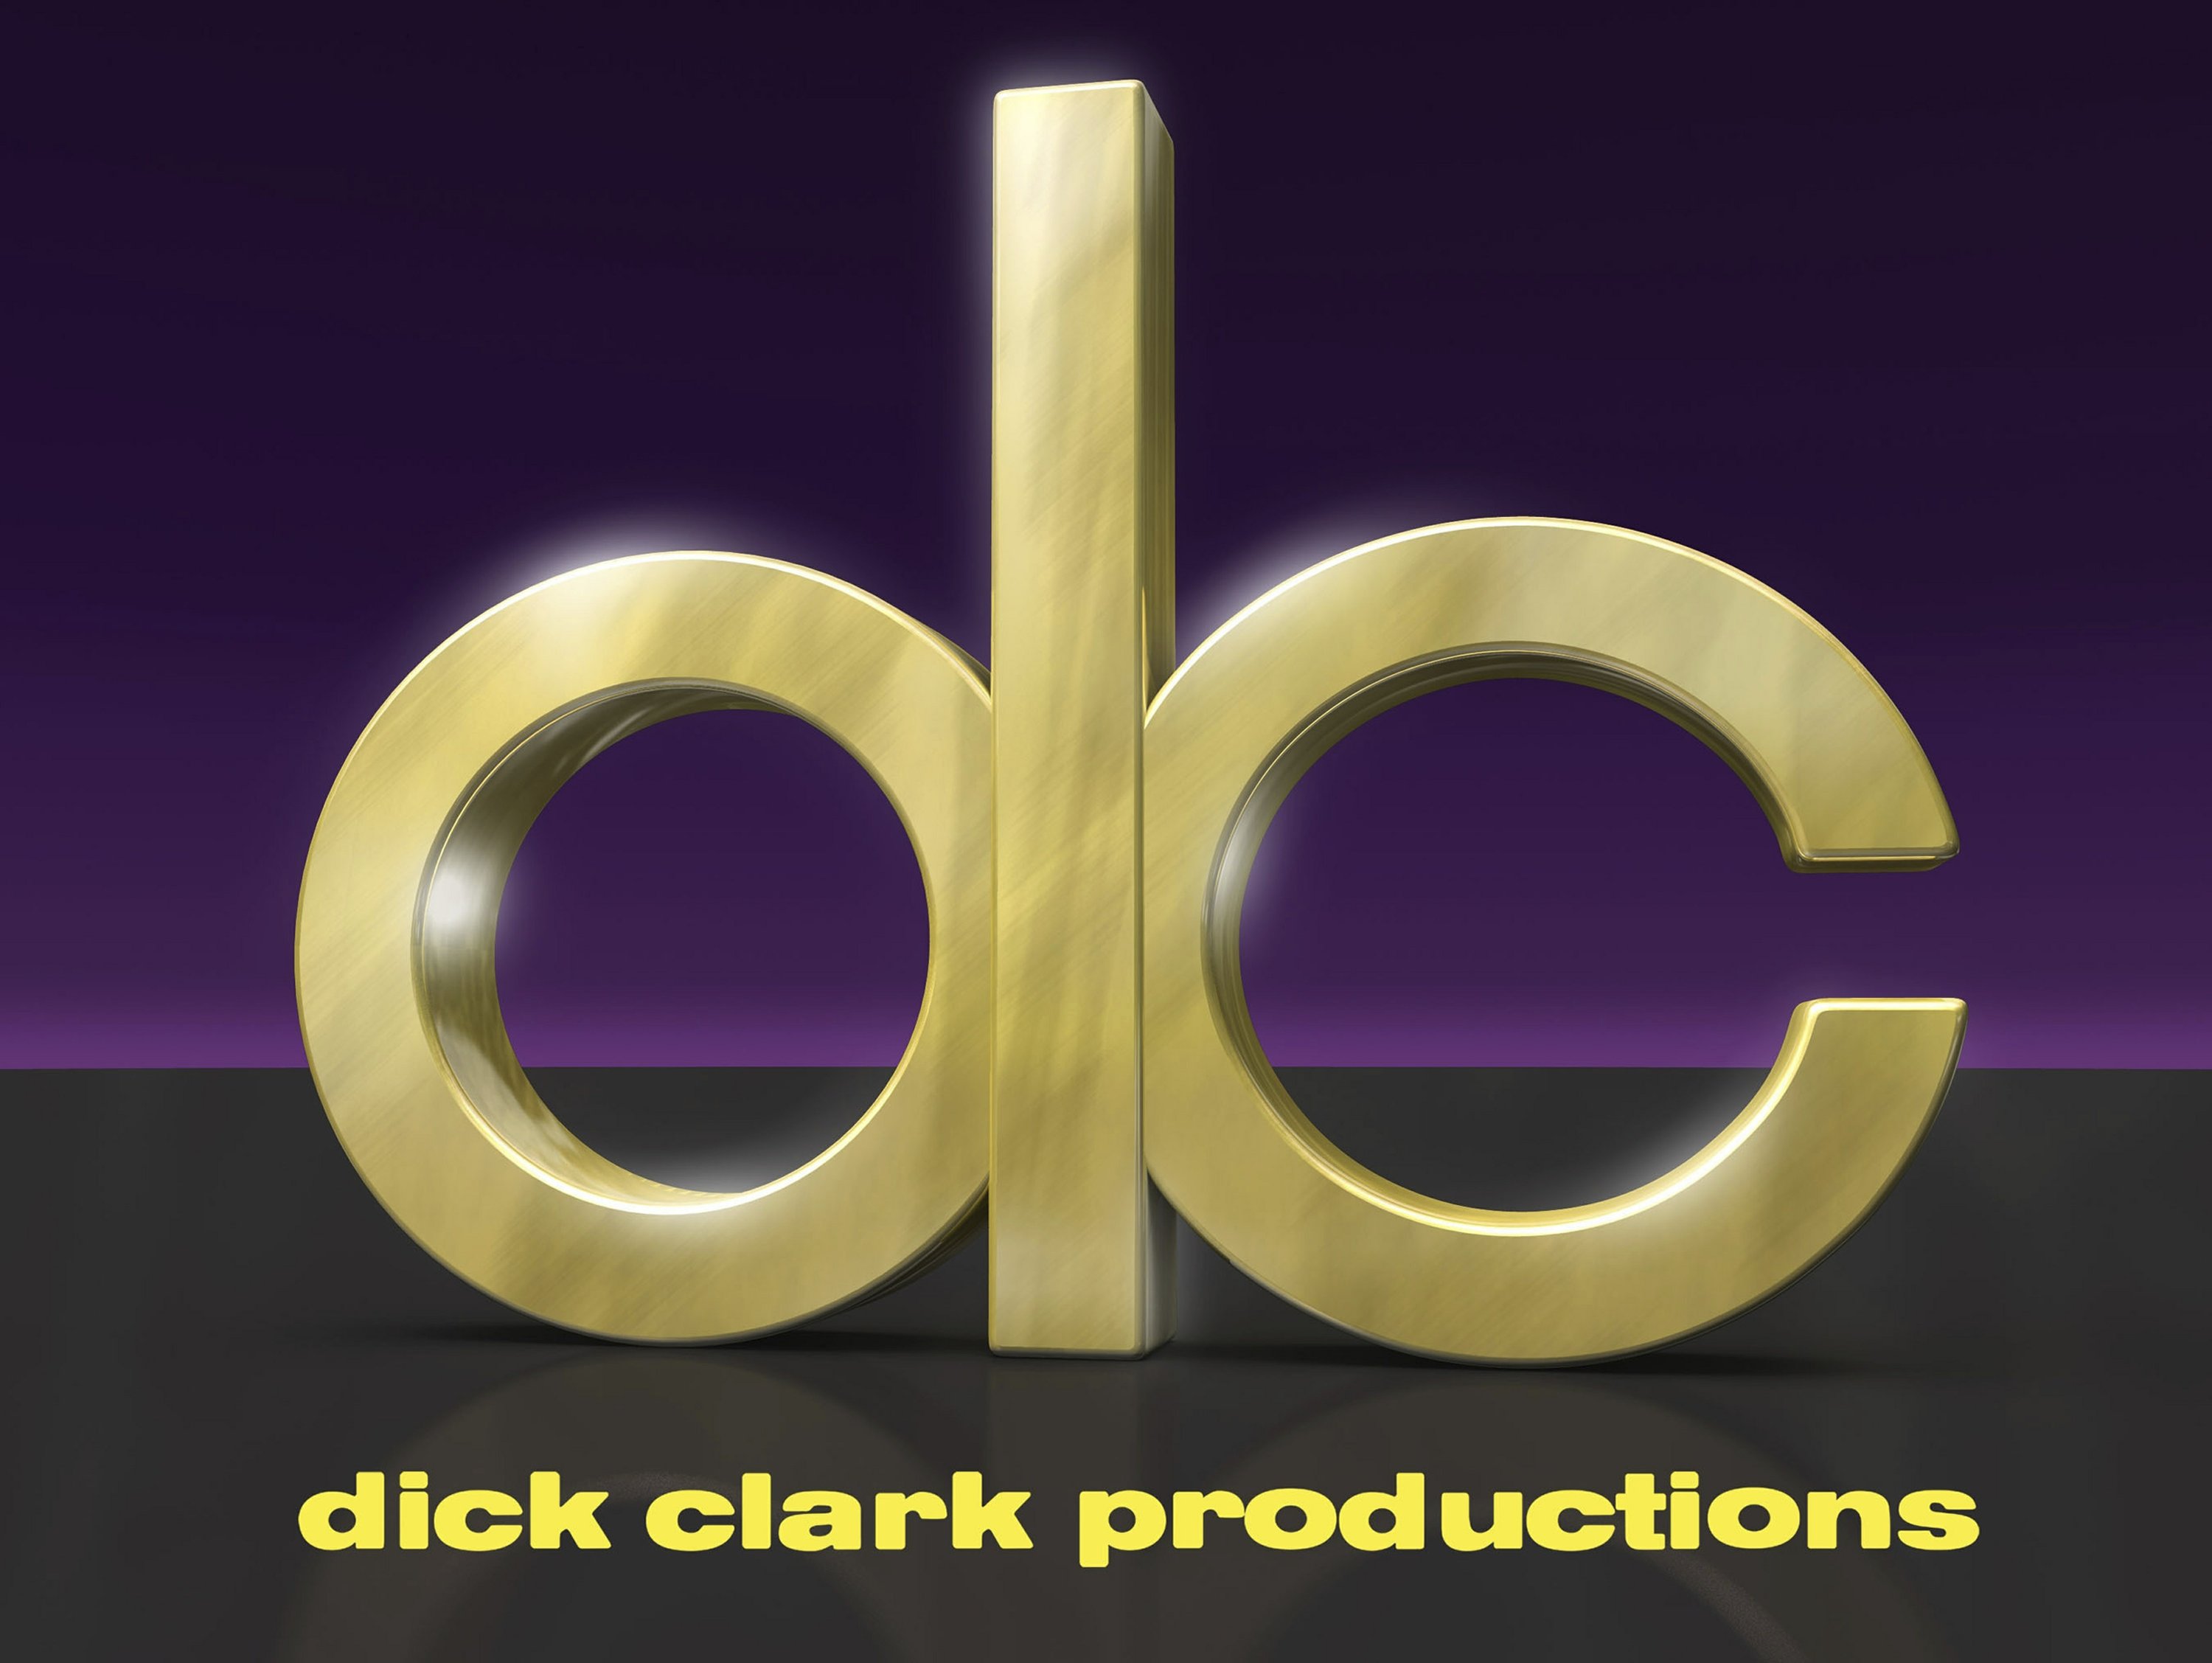 Dick clark productions sells to china's wanda group